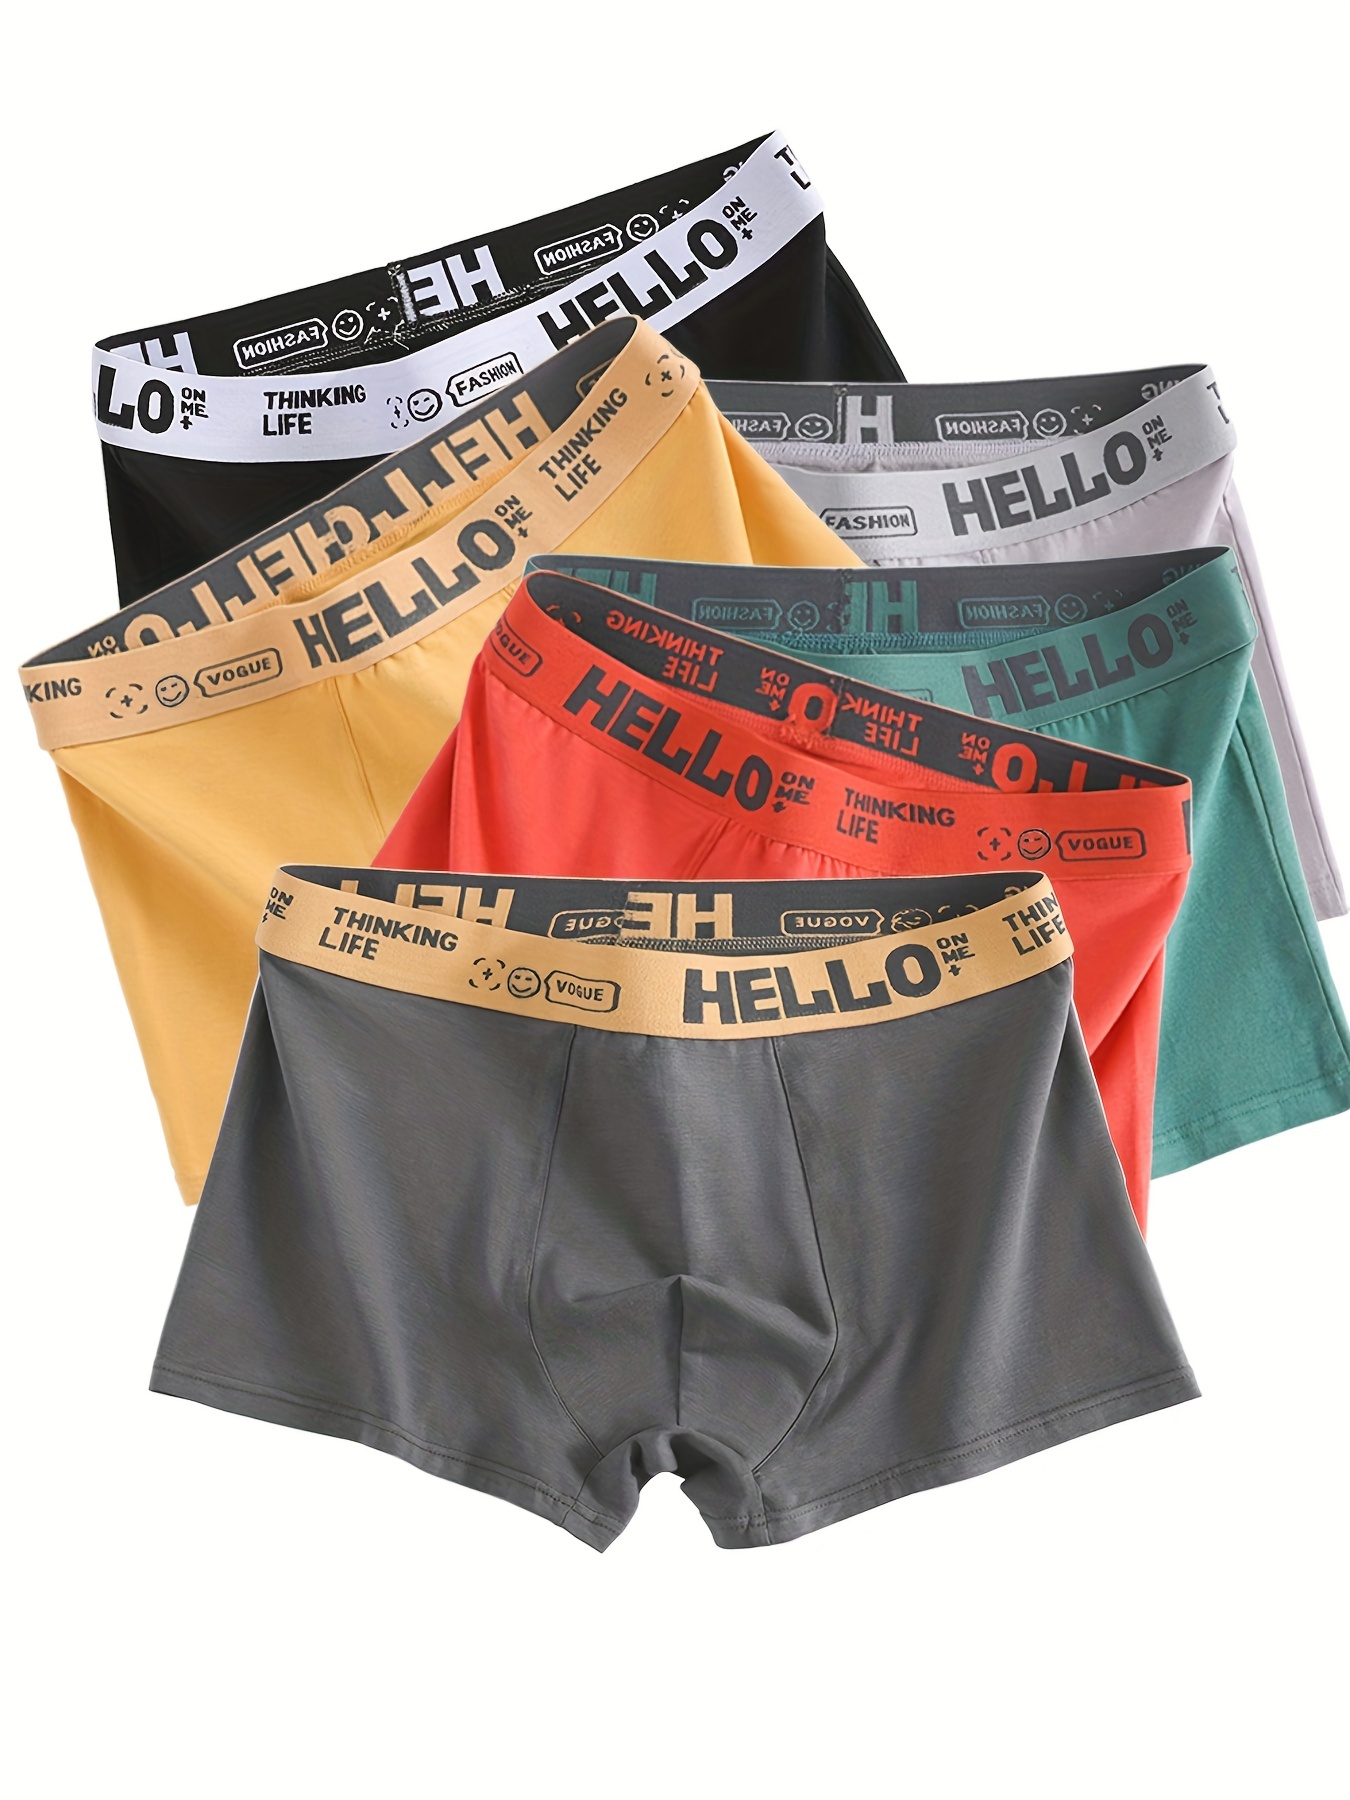 3pcs Men's 100% Cotton Arrow Shorts Printed Loose Breathable Boxers  Underwear Briefs, Multicolor Set